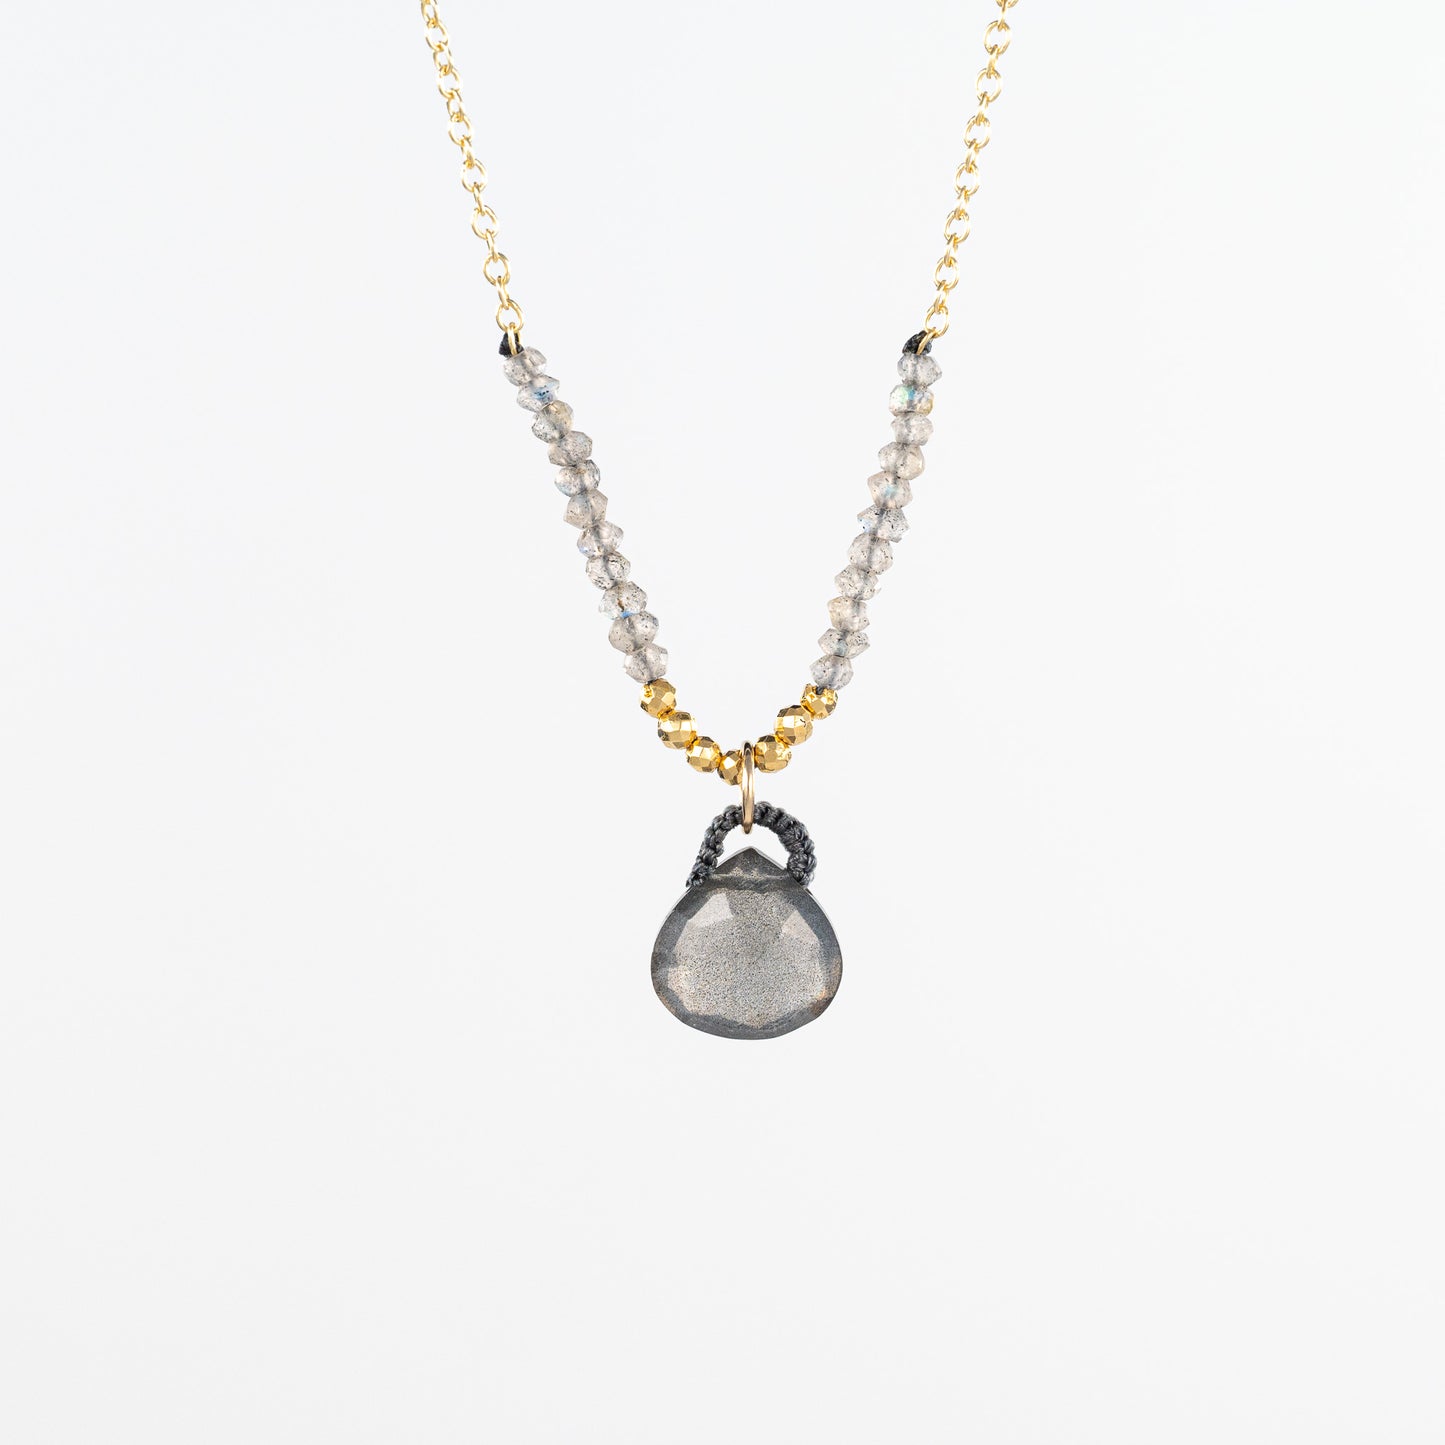 Danielle Welmond Labradorite Drop Necklace with Petite Labradorite Accent Beads